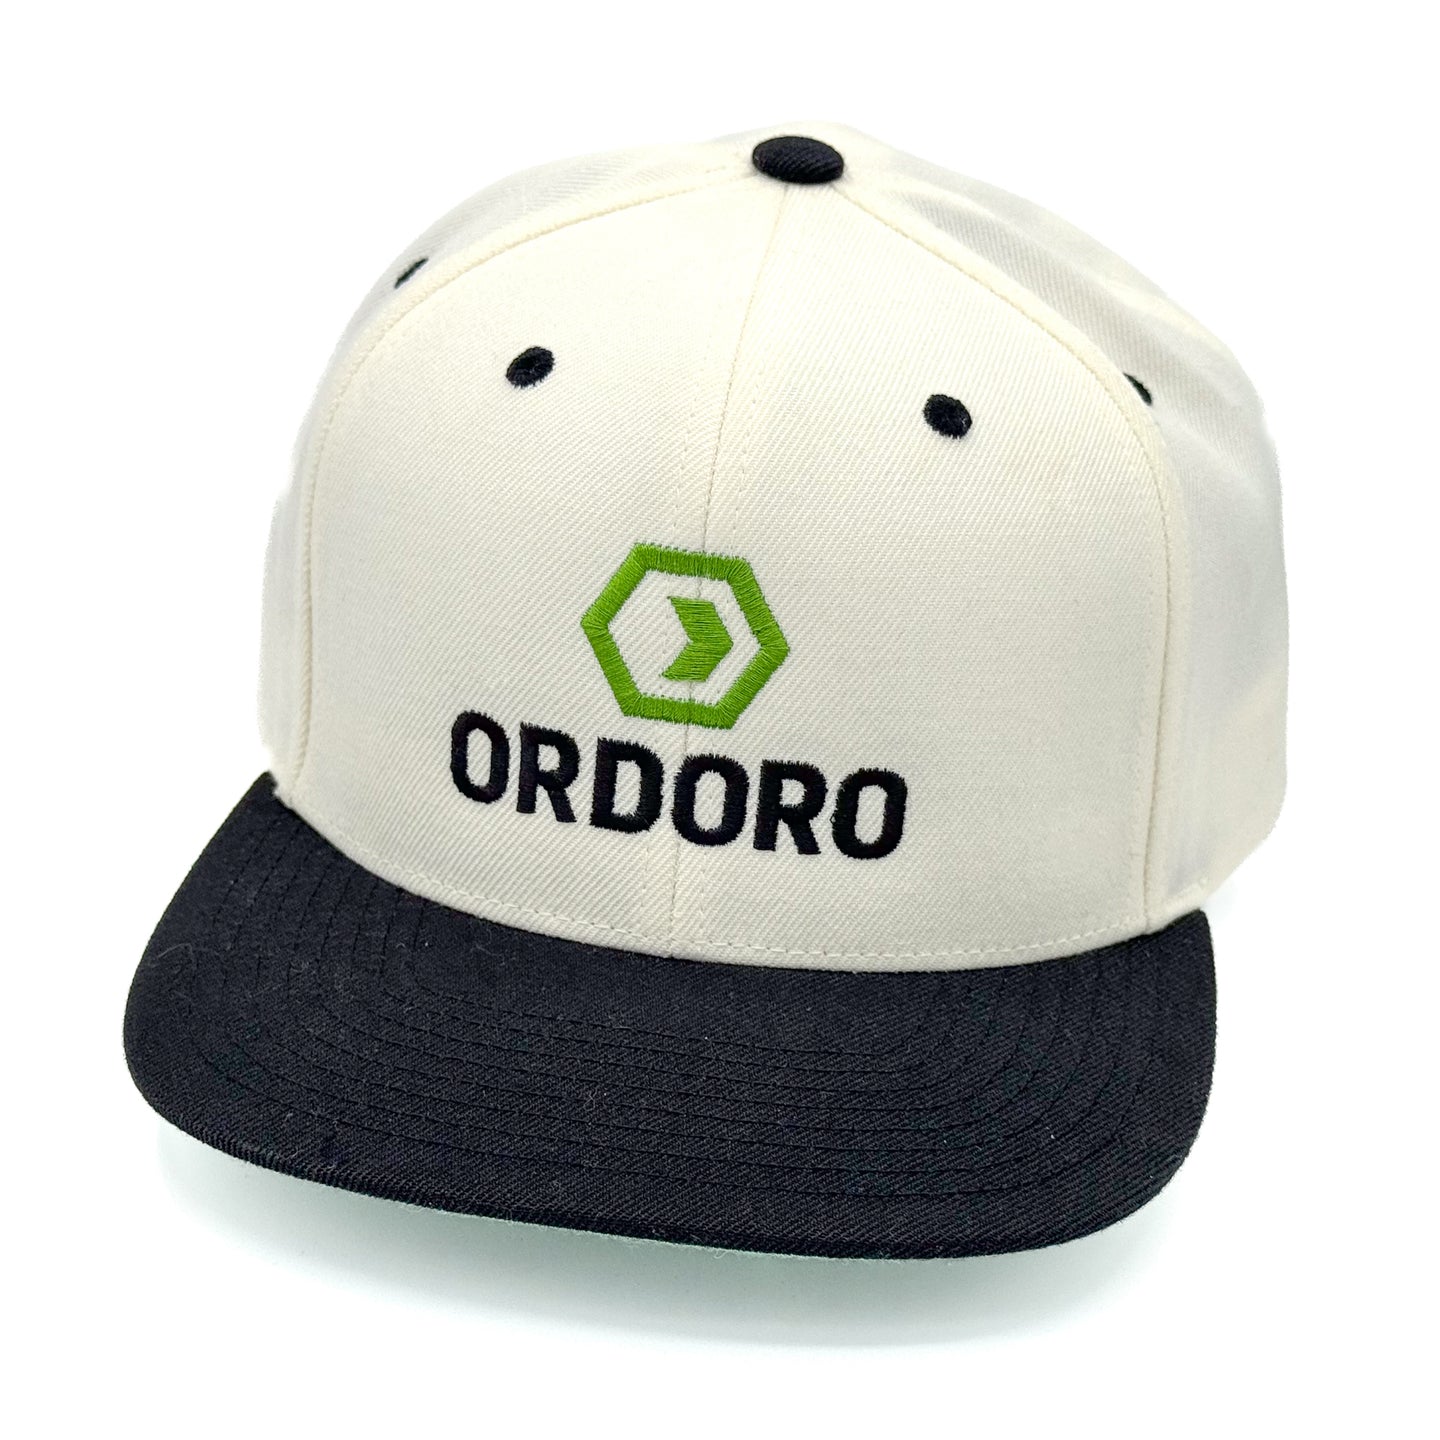 Ordoro Snapback Hat (Natural/Black)